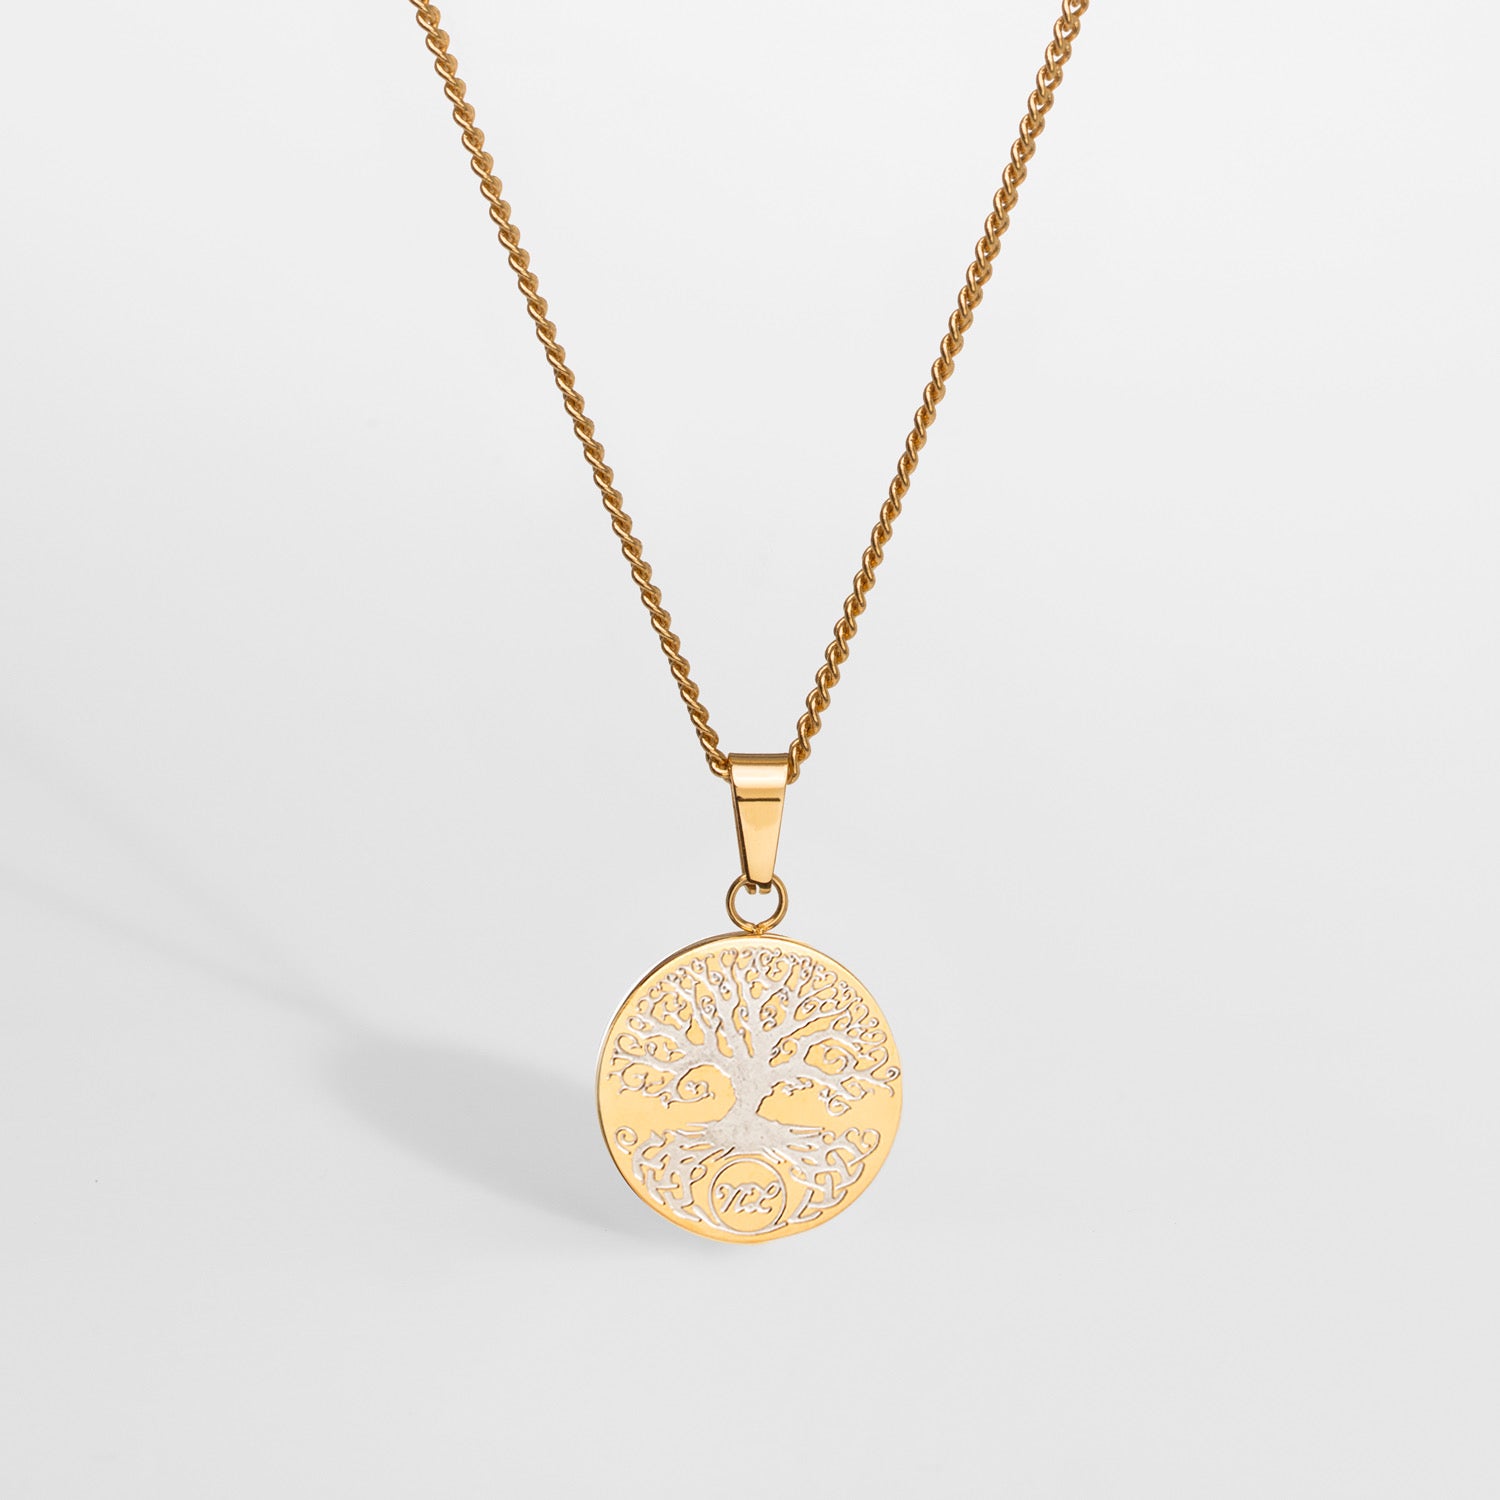 NL Yggdrasil pendant - Gold-toned